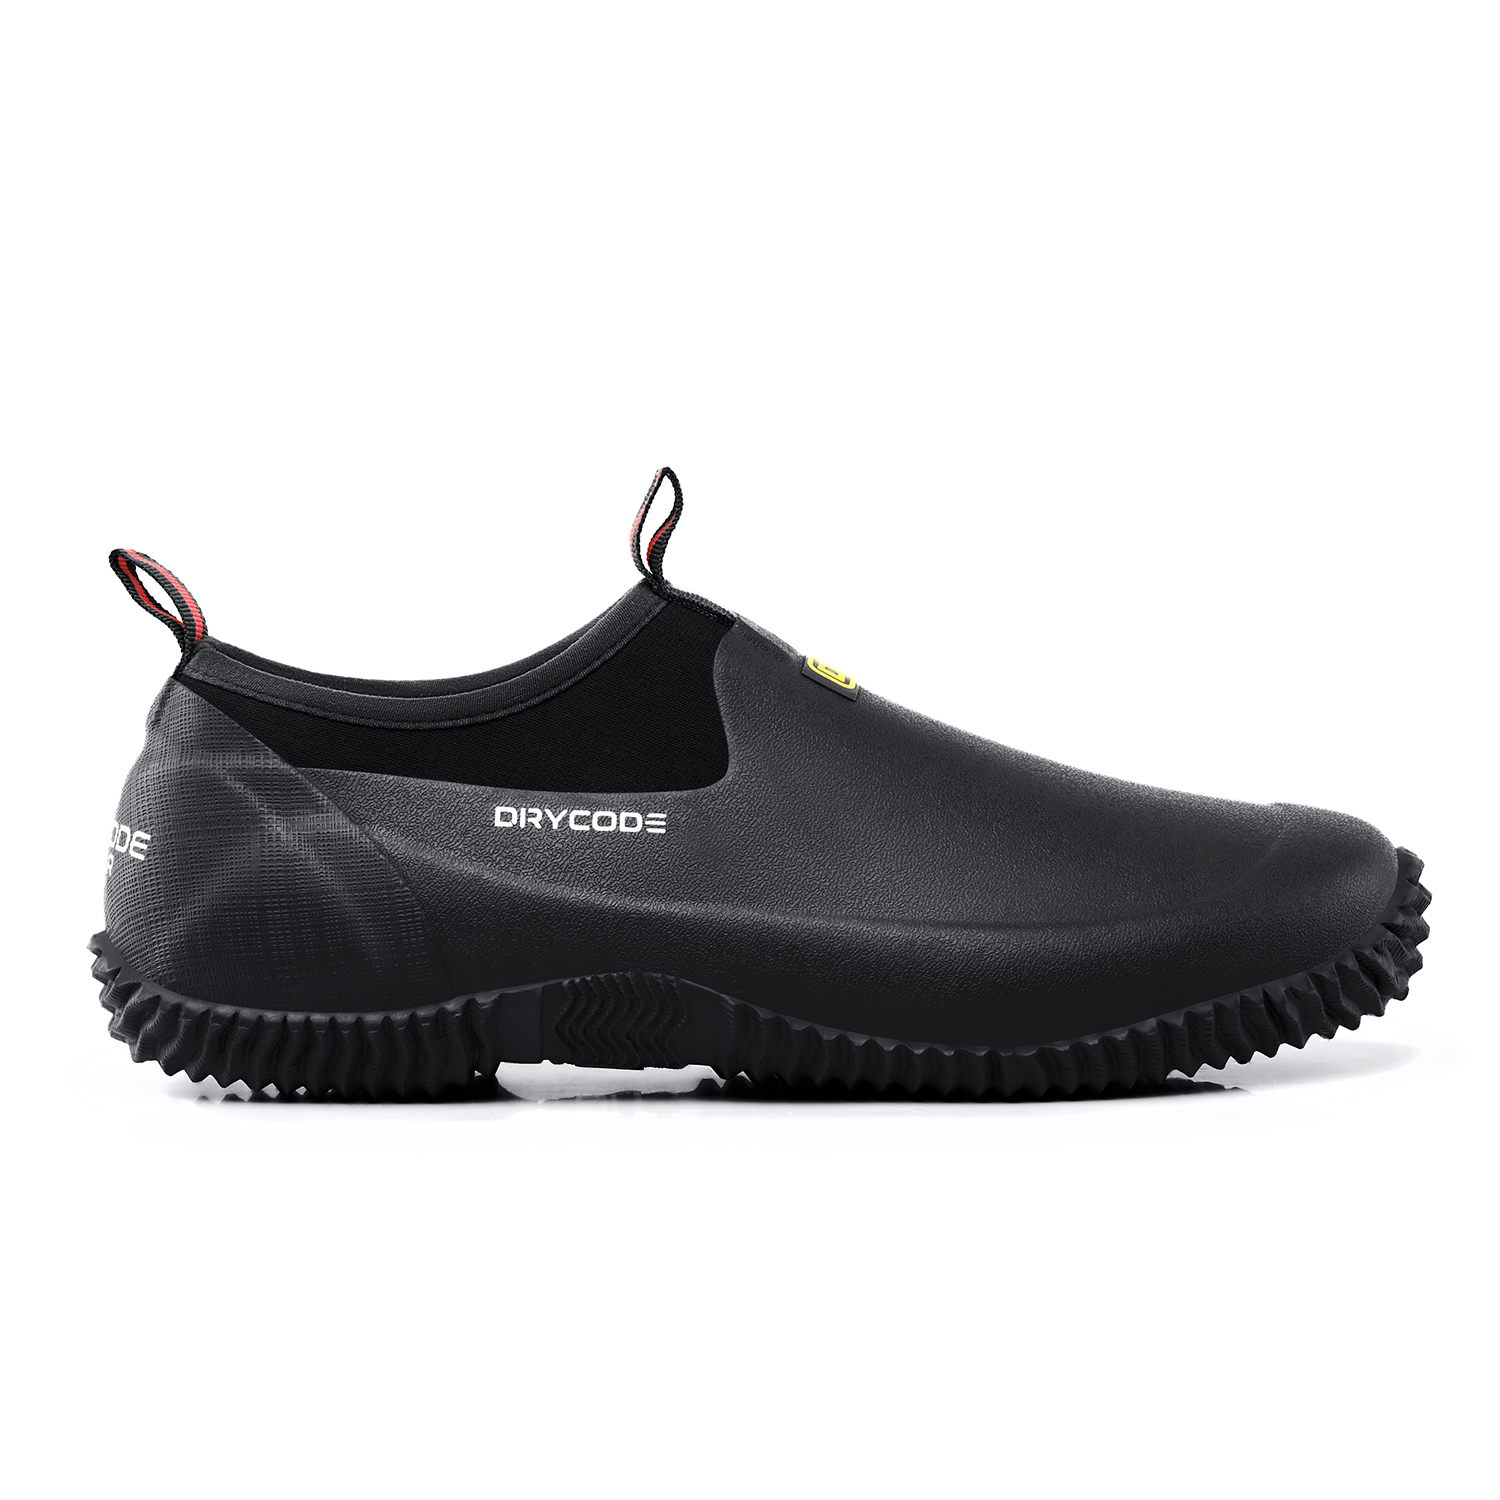 https://img-va.myshopline.com/image/store/1691119653301/DRYCODE-Garden-Boots-for-Women-Men,-Slip-on-Rain-Shoes-for-Lawn-Care-(2).jpeg?w=1500&h=1500